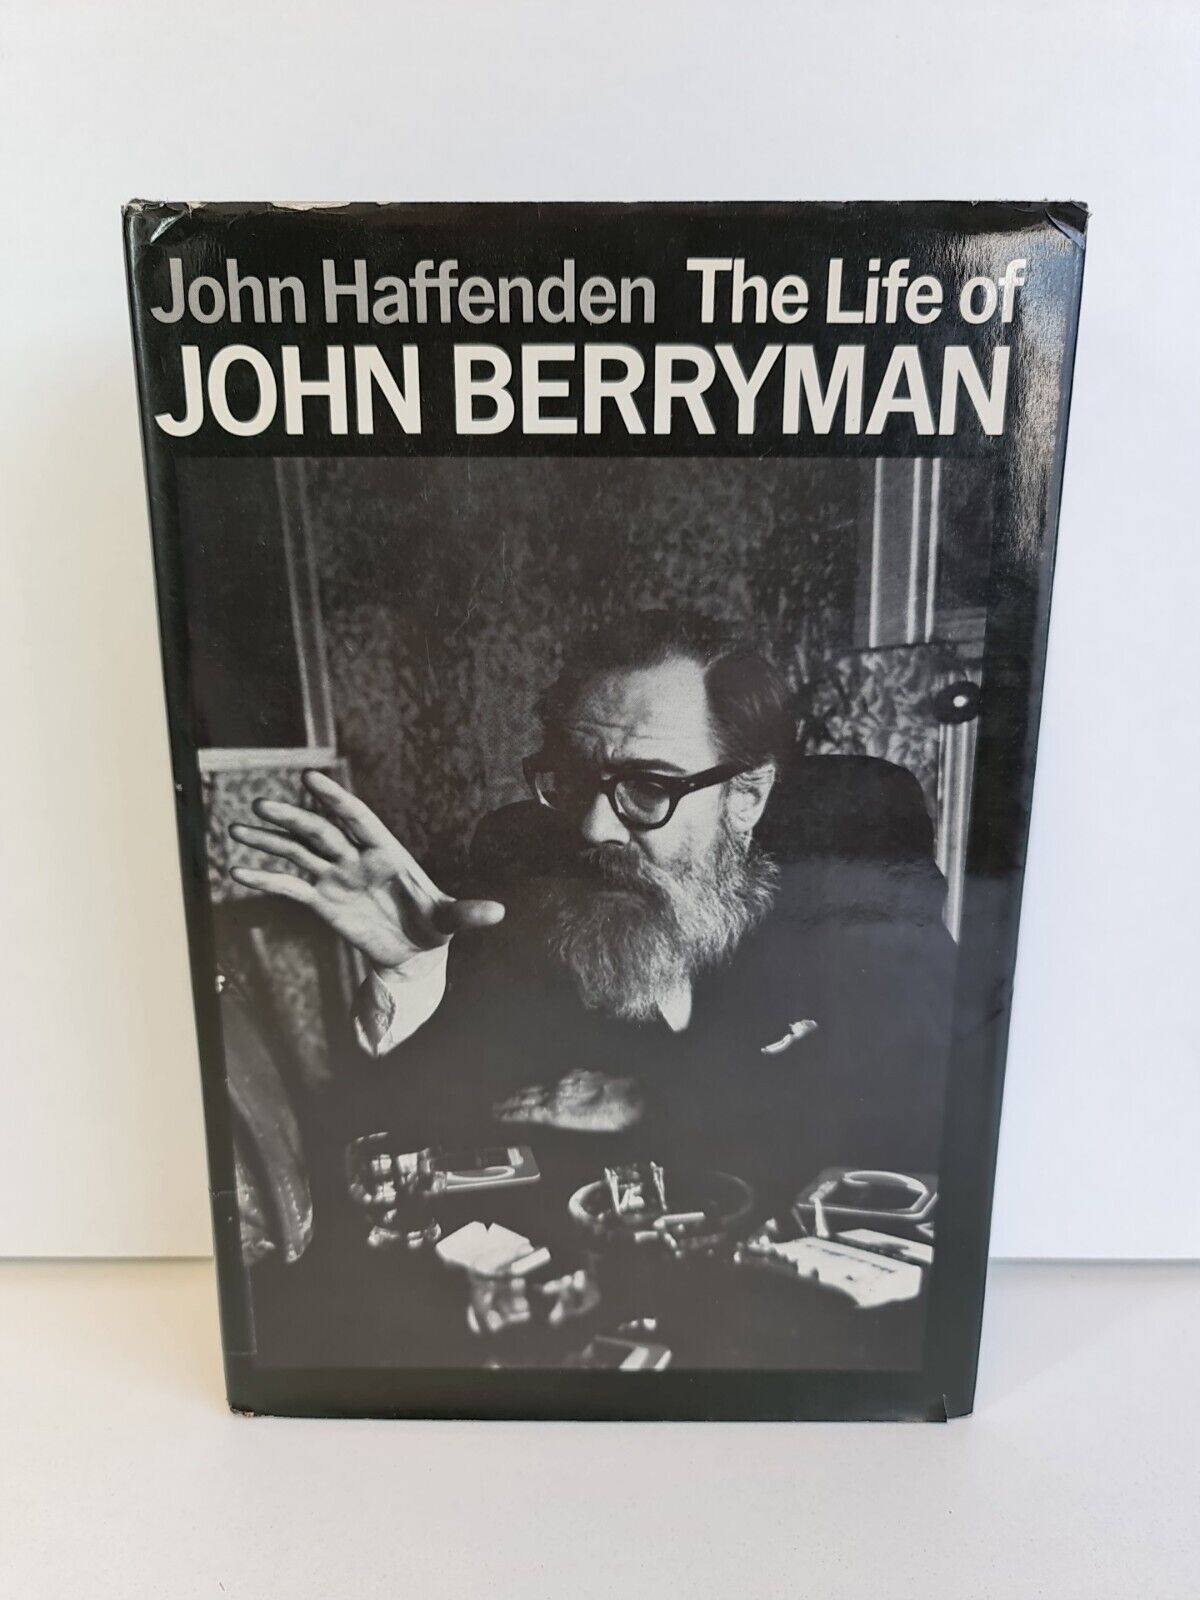 Life of John Berryman by John Haffenden (1982)